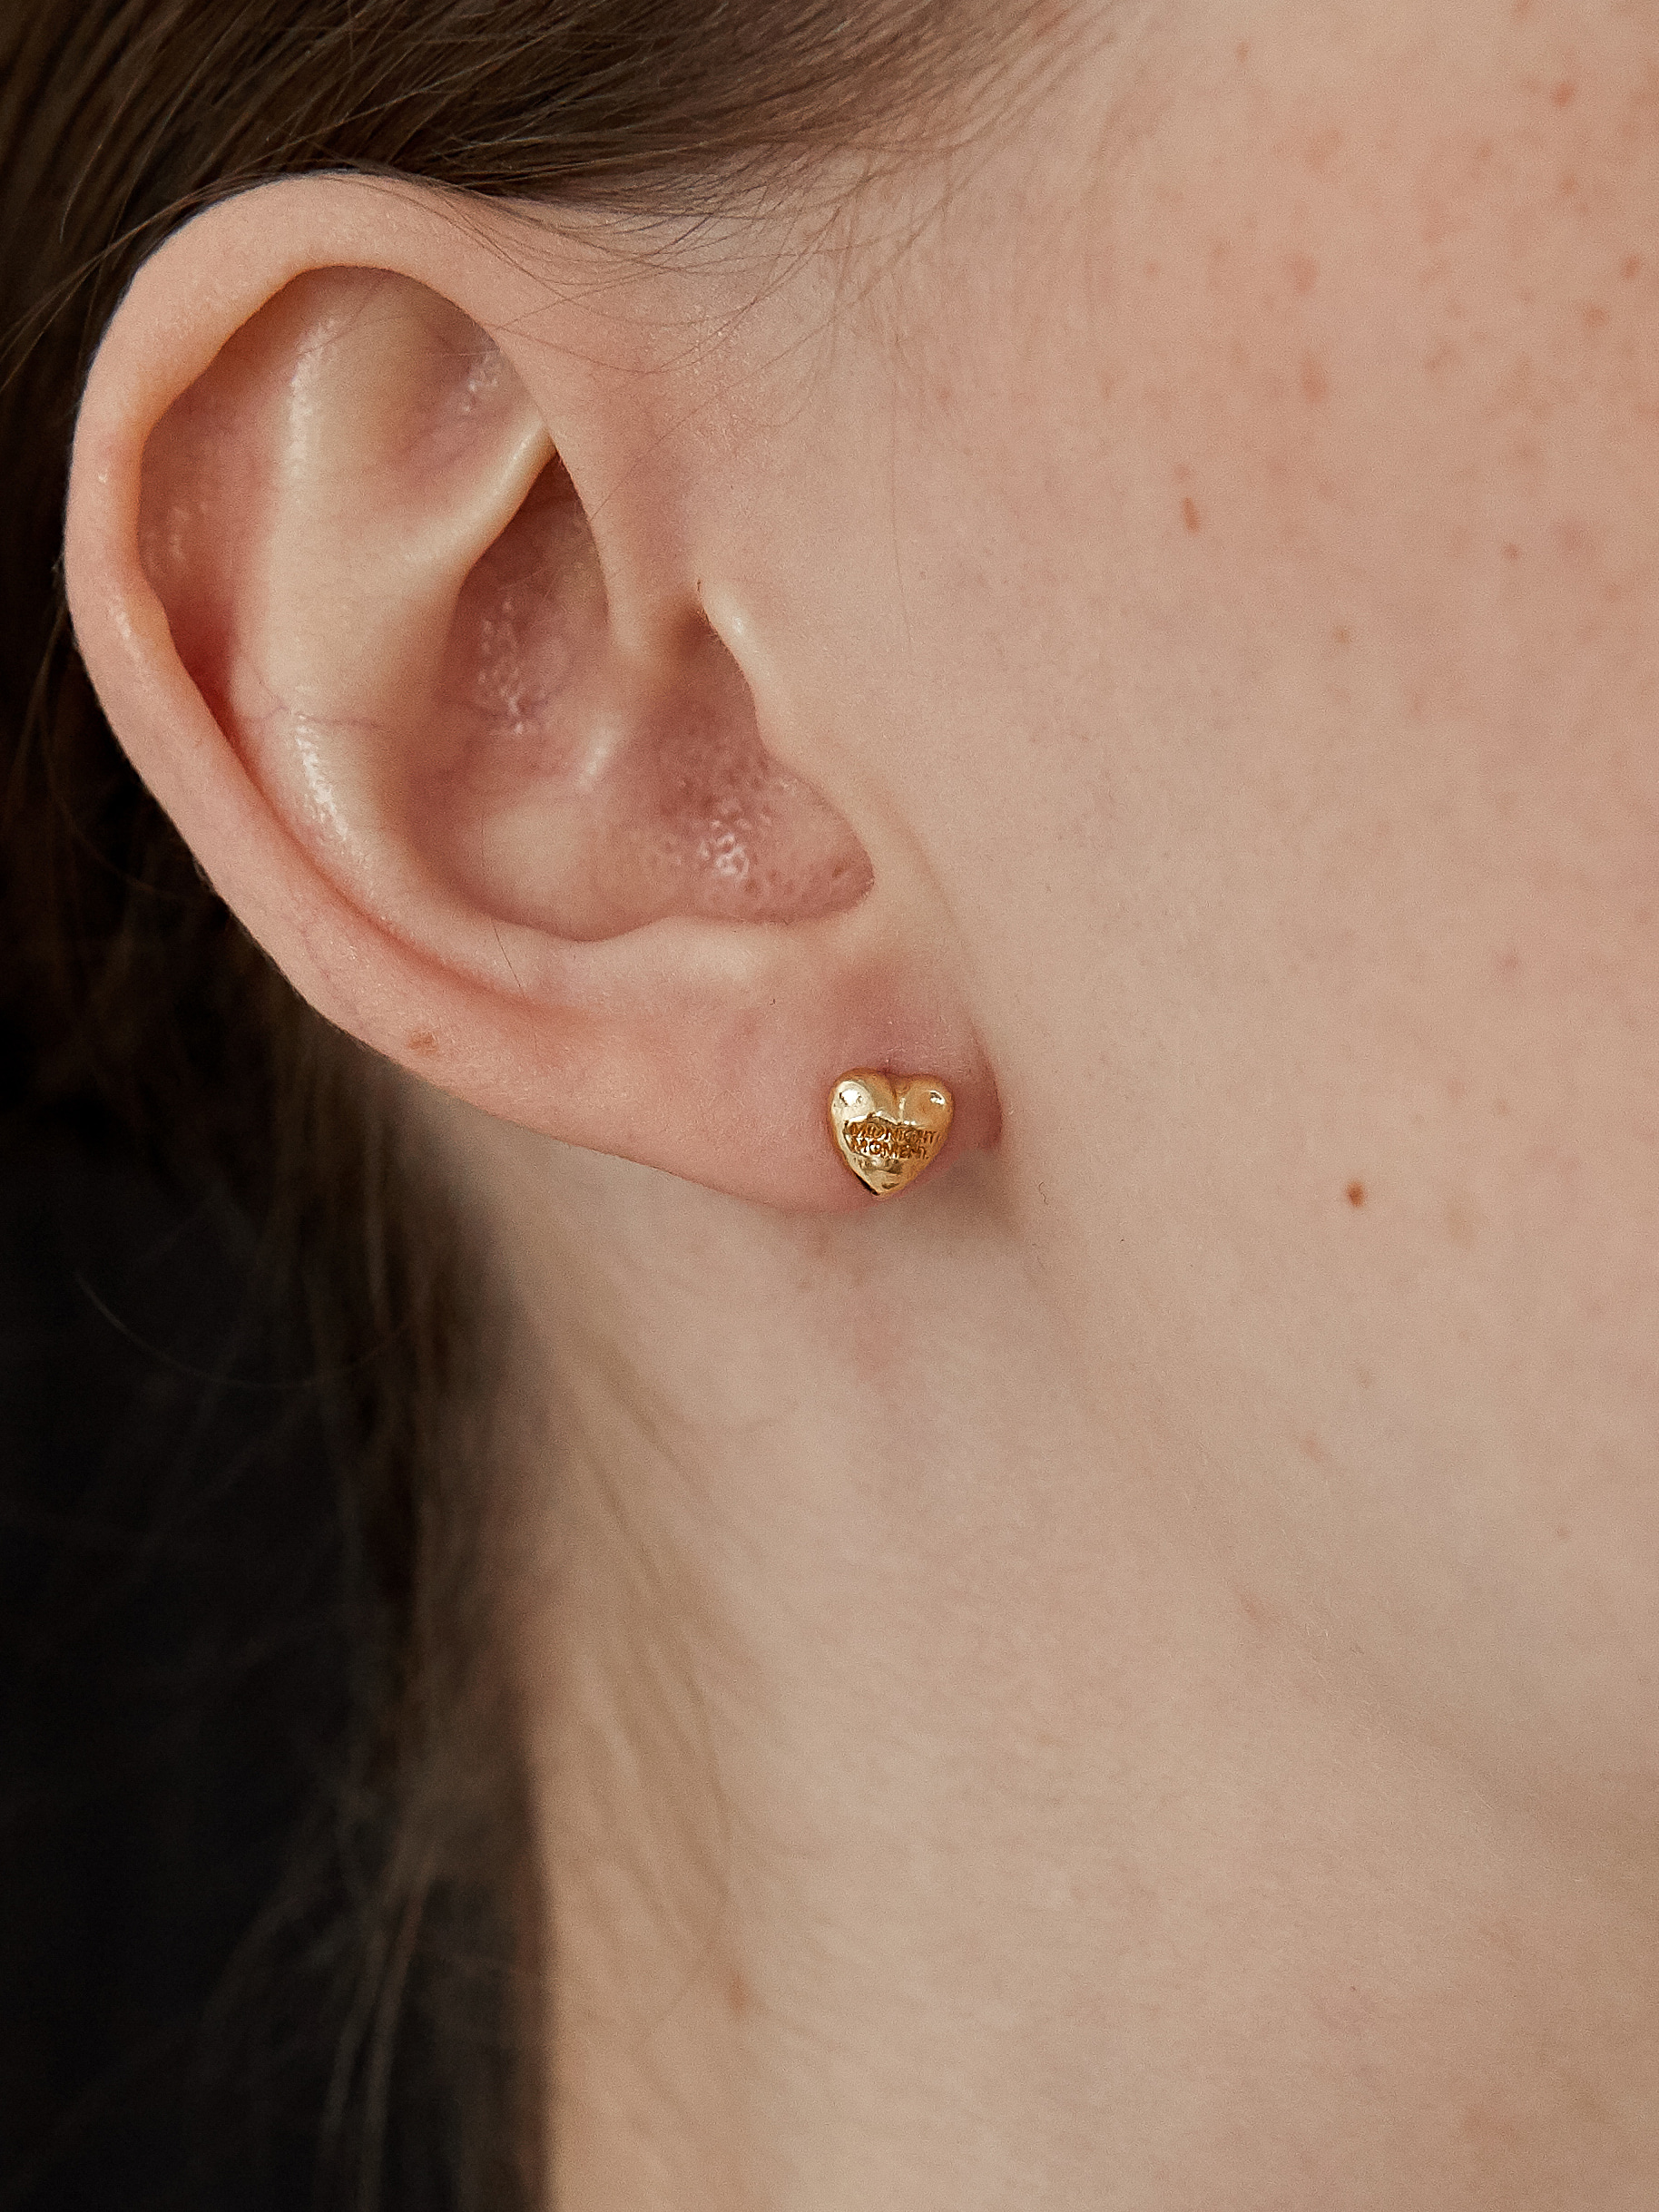 Bumpy petit earring - gold